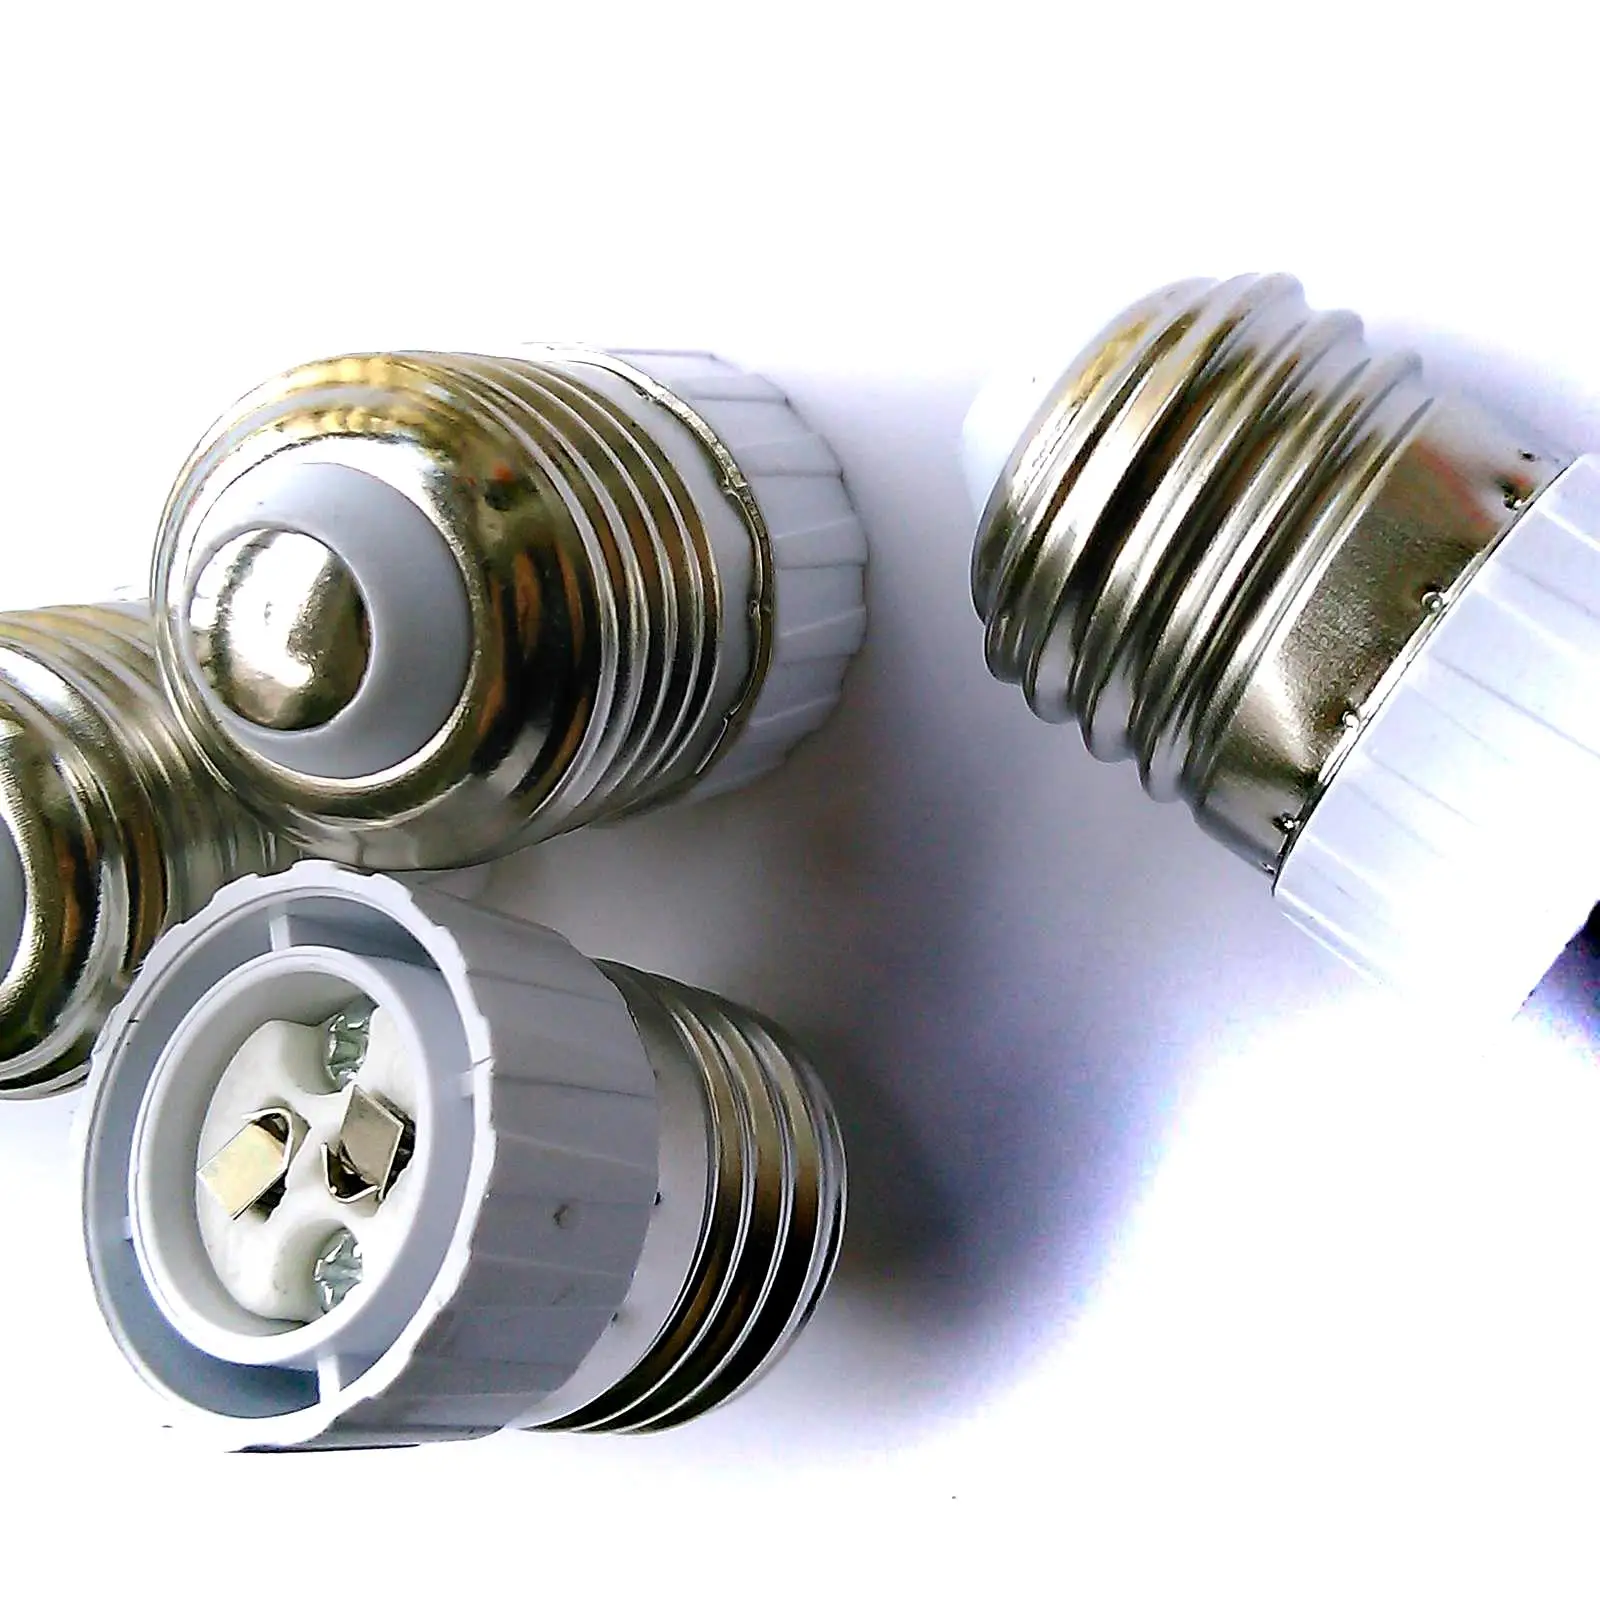 10 x E12 Male to E27 Female Socket Base LED Halogen CFL Light Bulb Lamp Adapter 